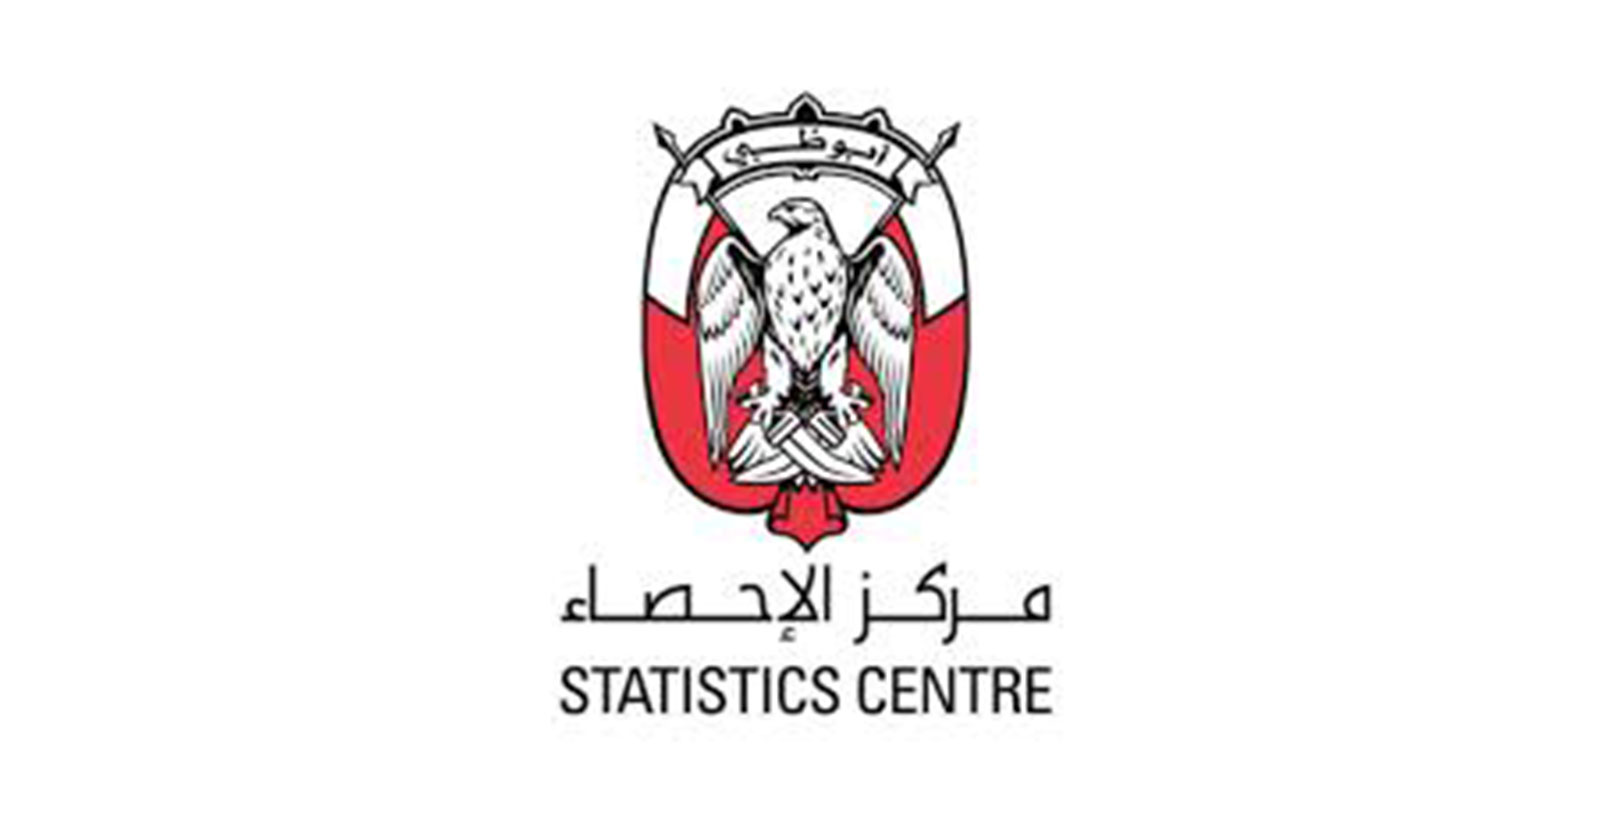 Statistics Centre Abu Dhabi (SCAD)